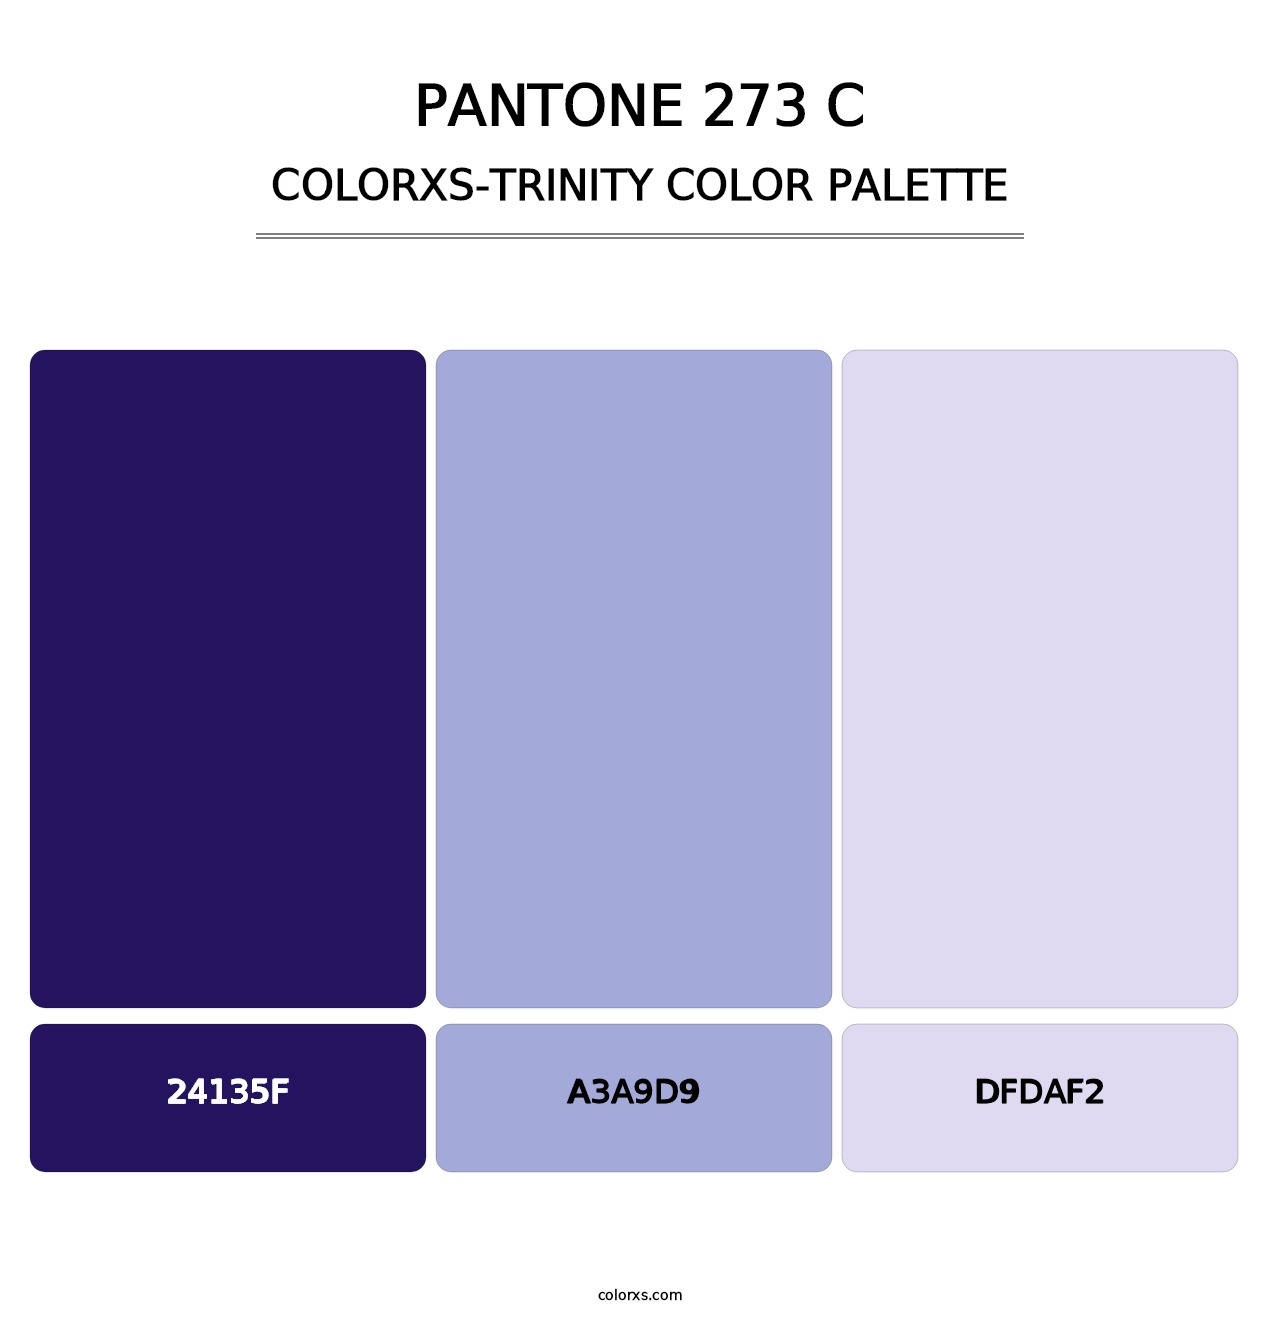 PANTONE 273 C - Colorxs Trinity Palette